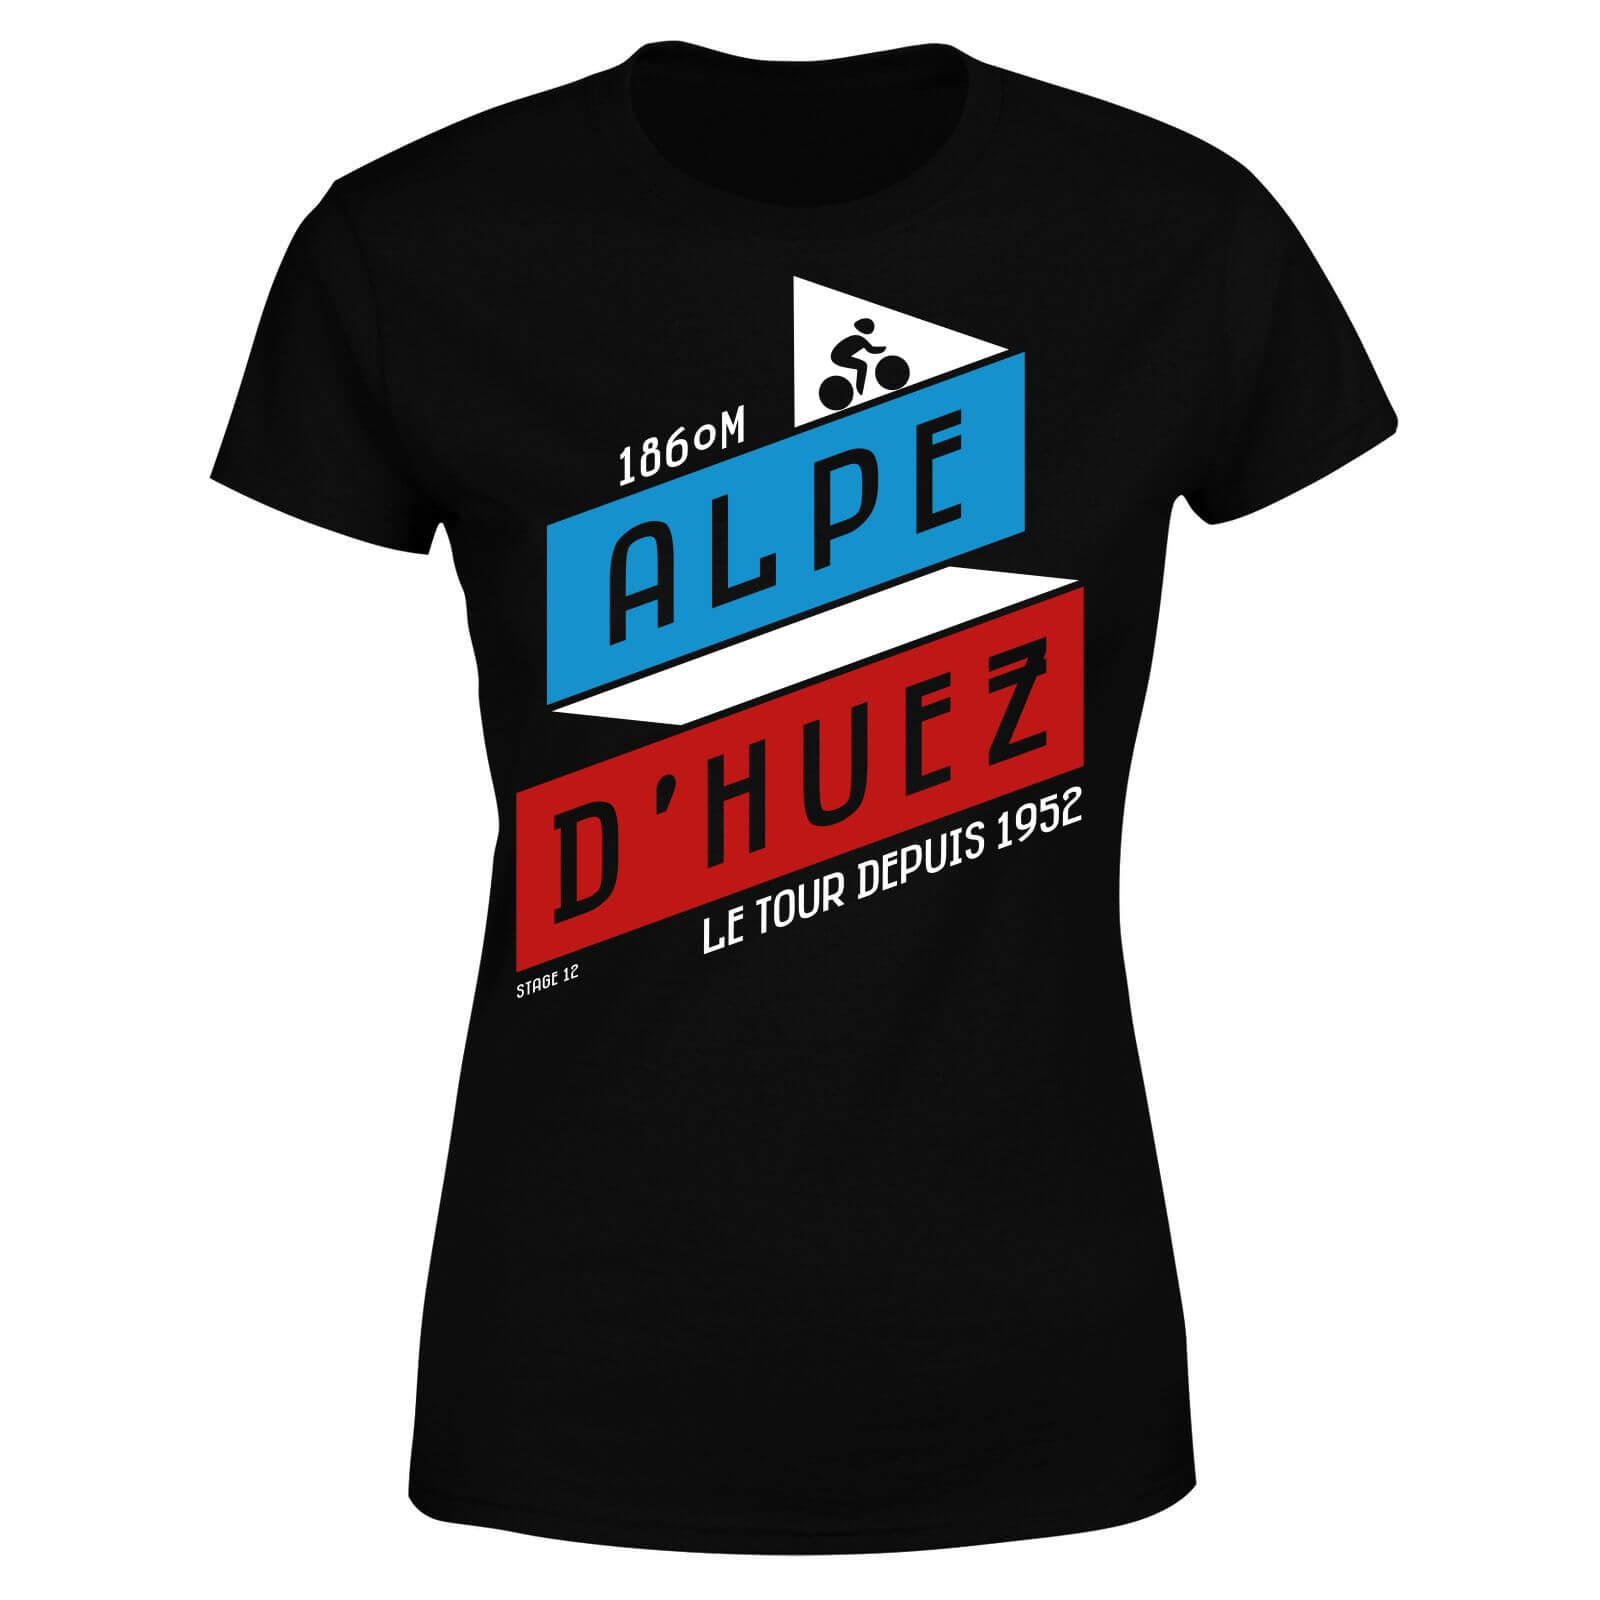 ALPE D'HUEZ Women's T-Shirt - Black - XXL - Black